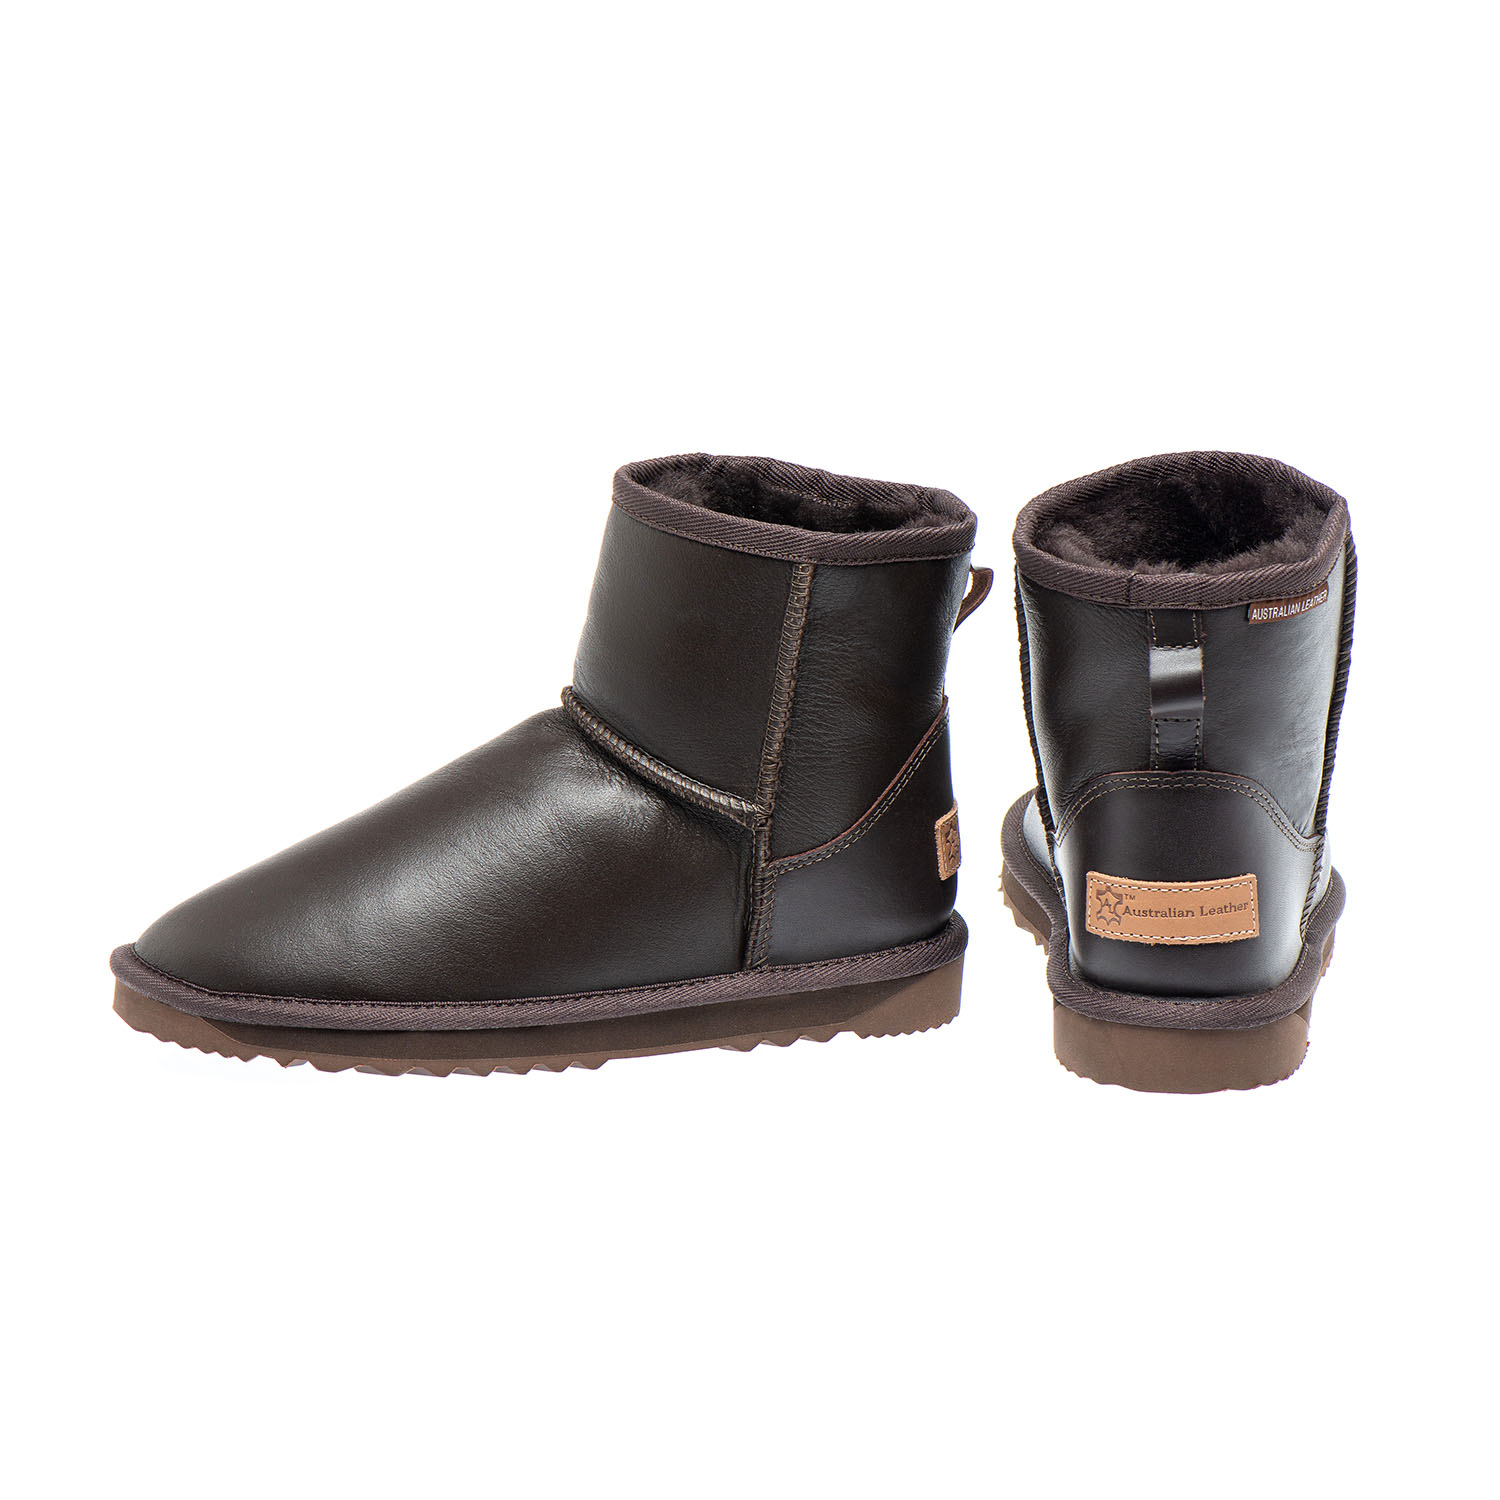 Australian Leather Napa Short Sheepskin Boots 14